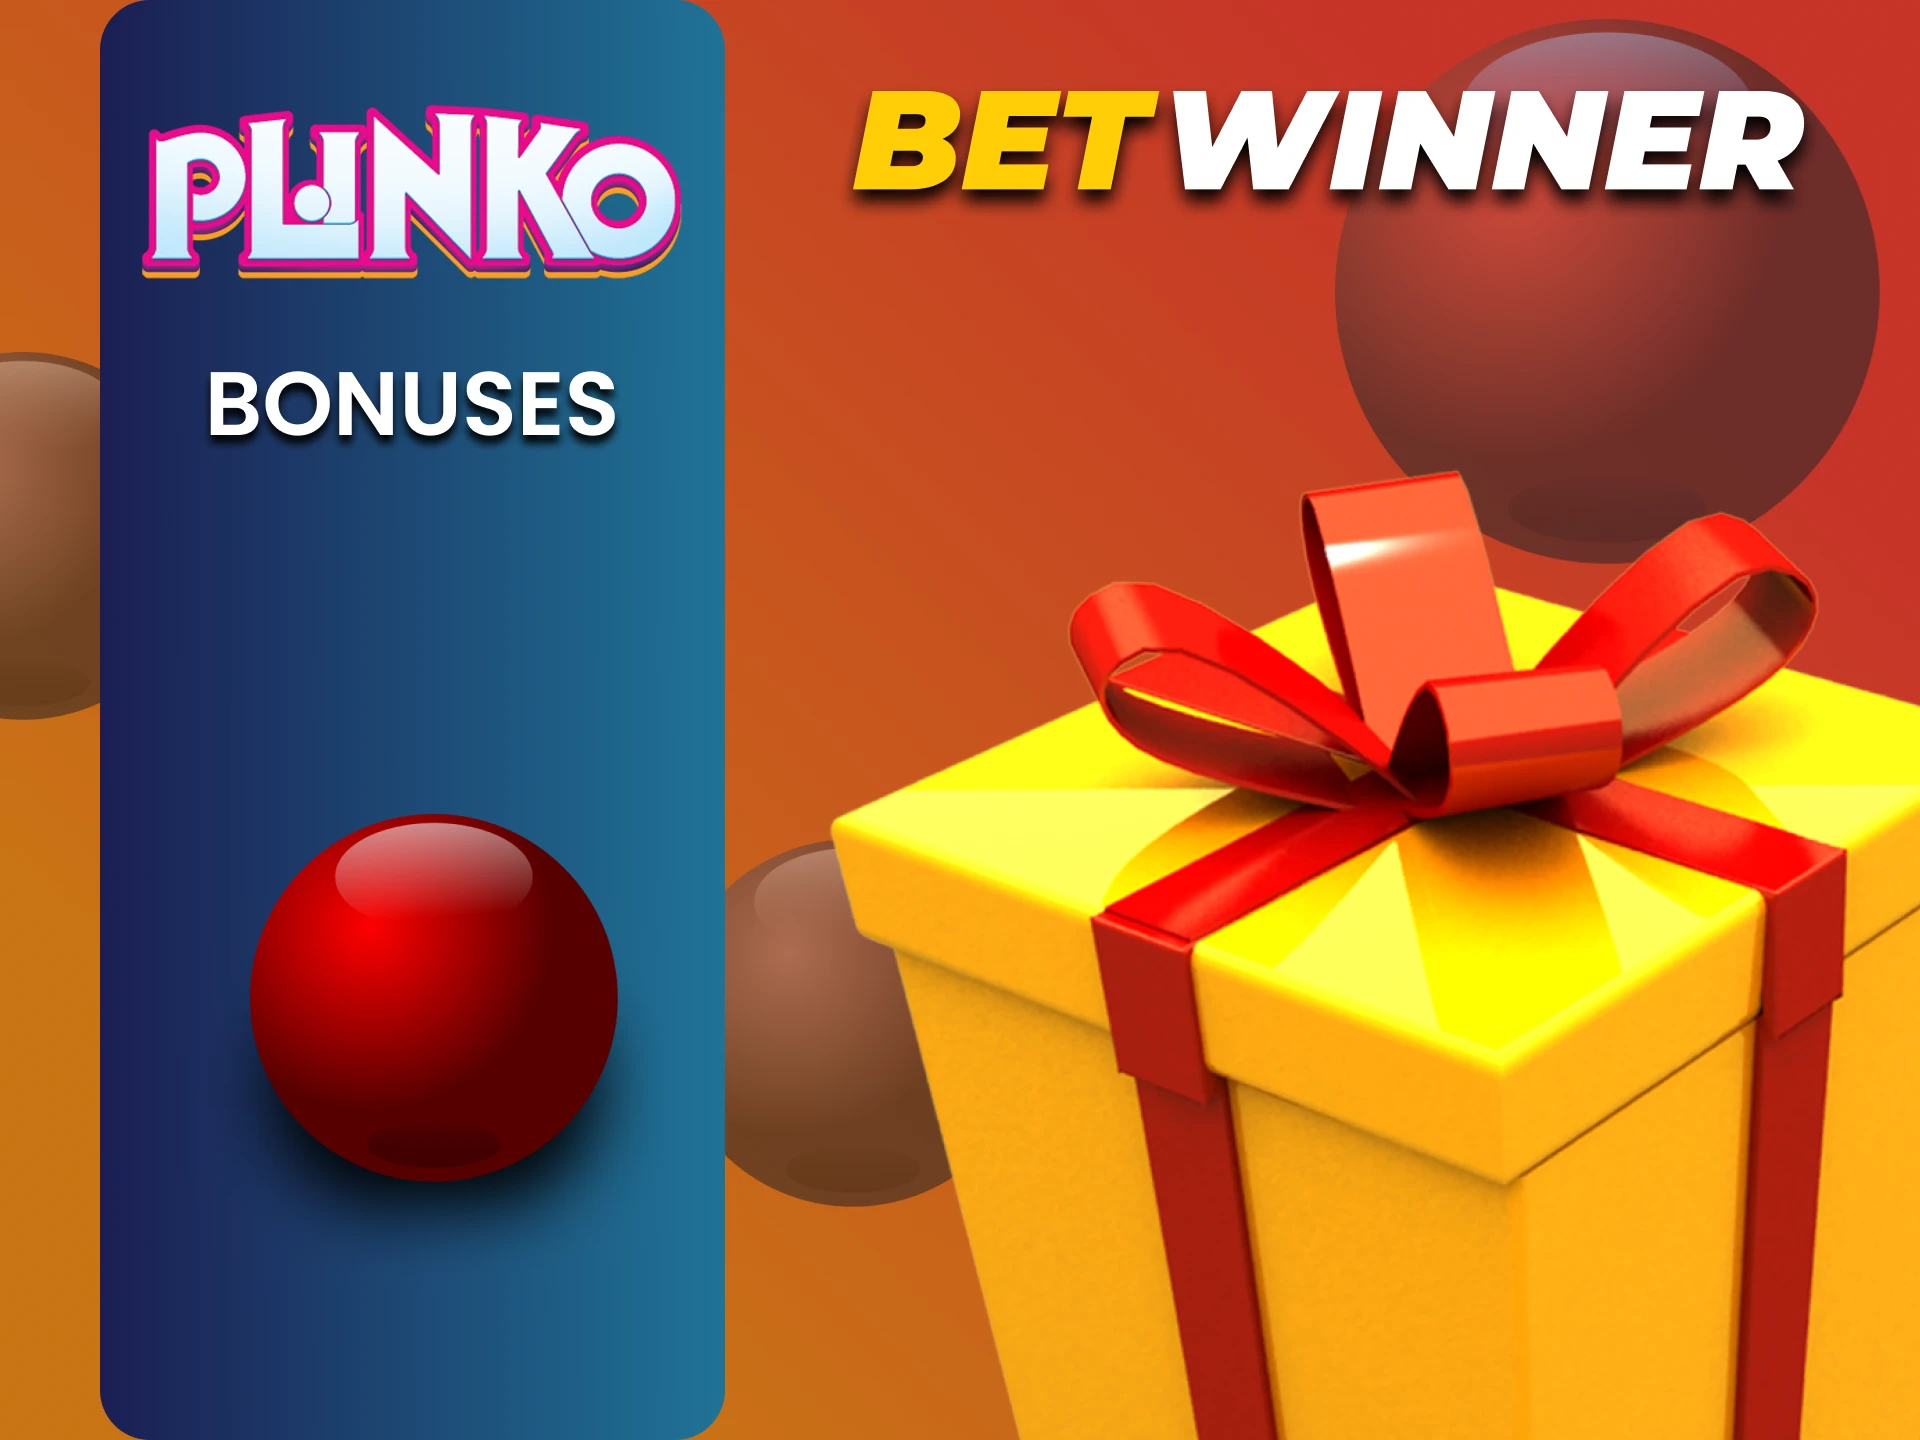 Get special Plinko bonuses from Betwinner.